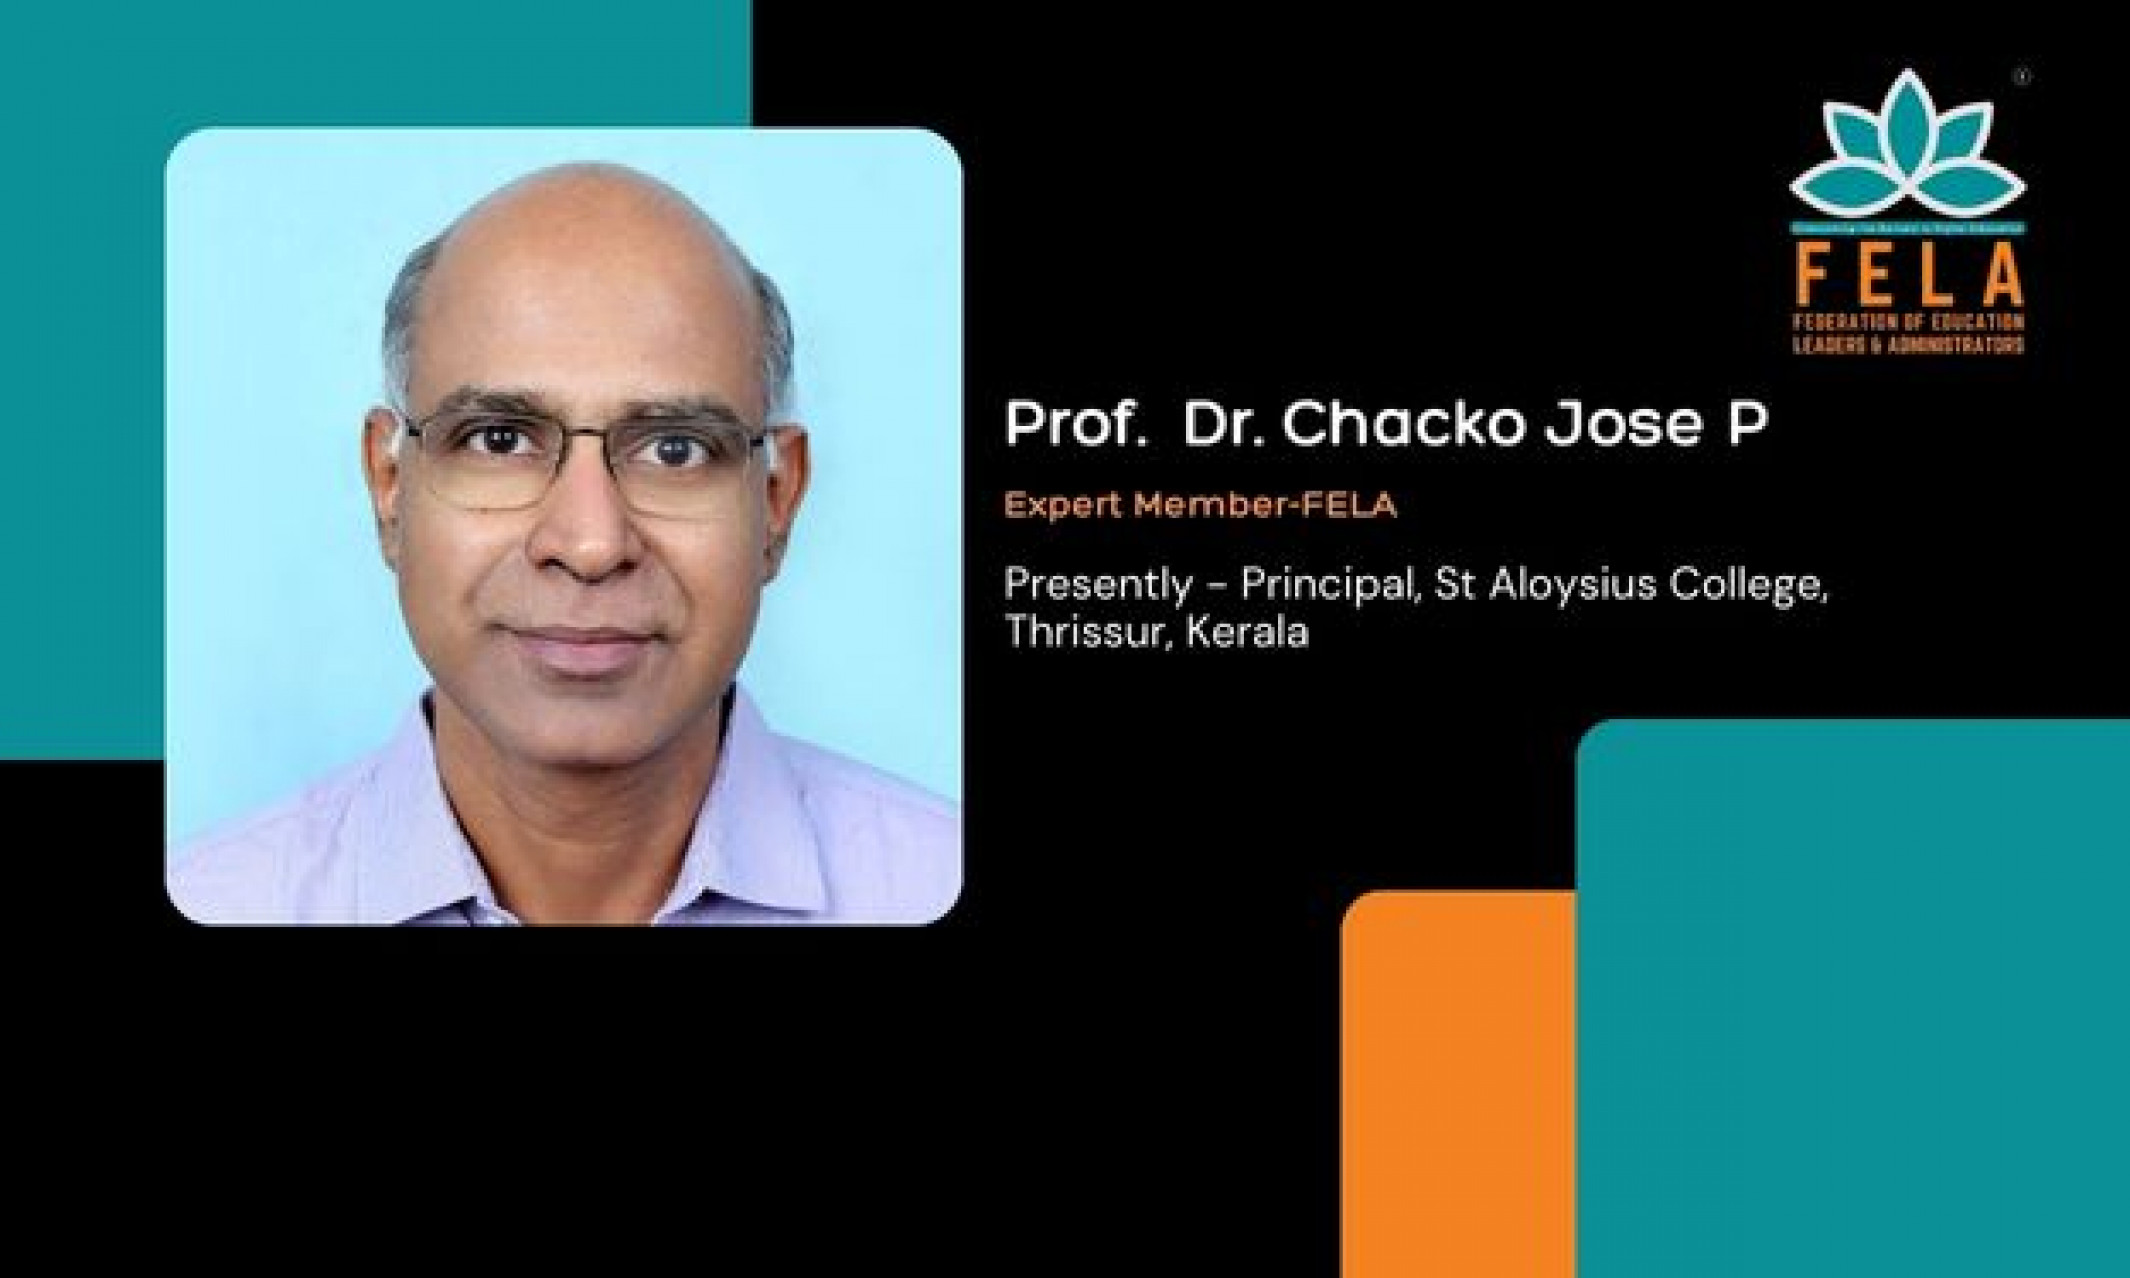 Dr. Chacko Jose P